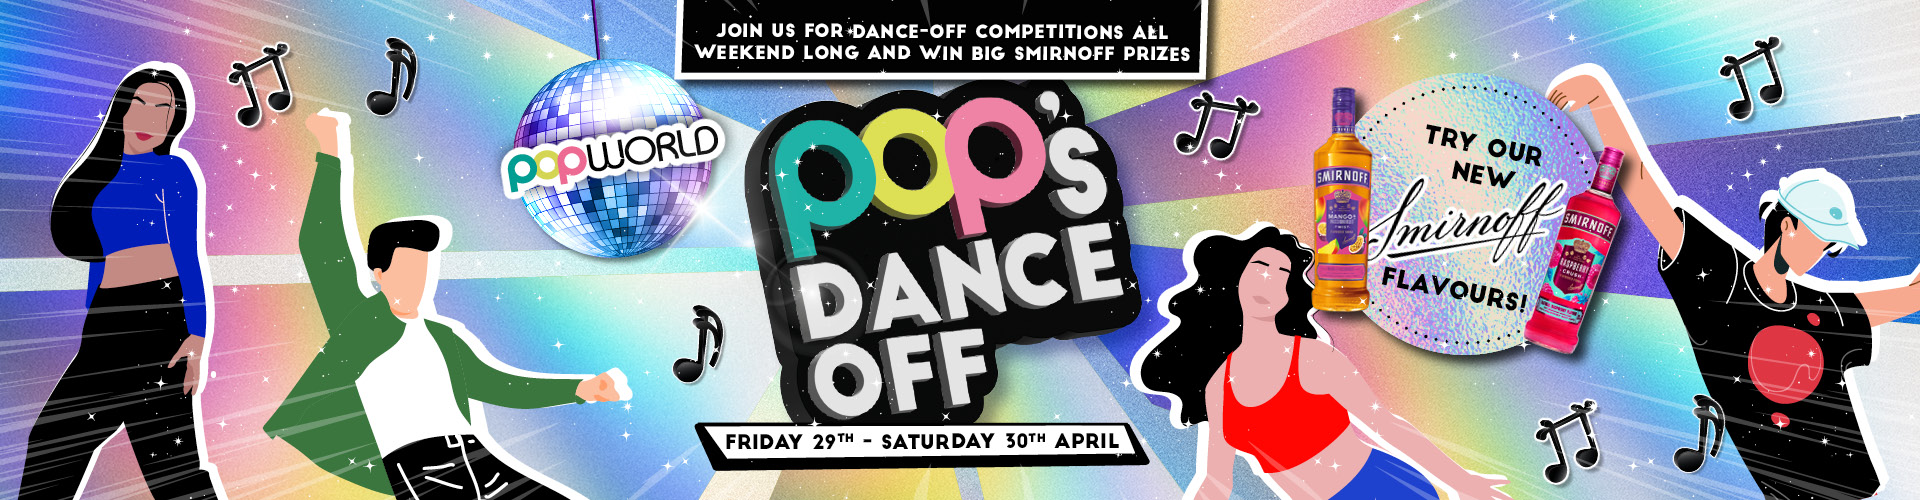 Pop's Dance Off Popworld Nottingham